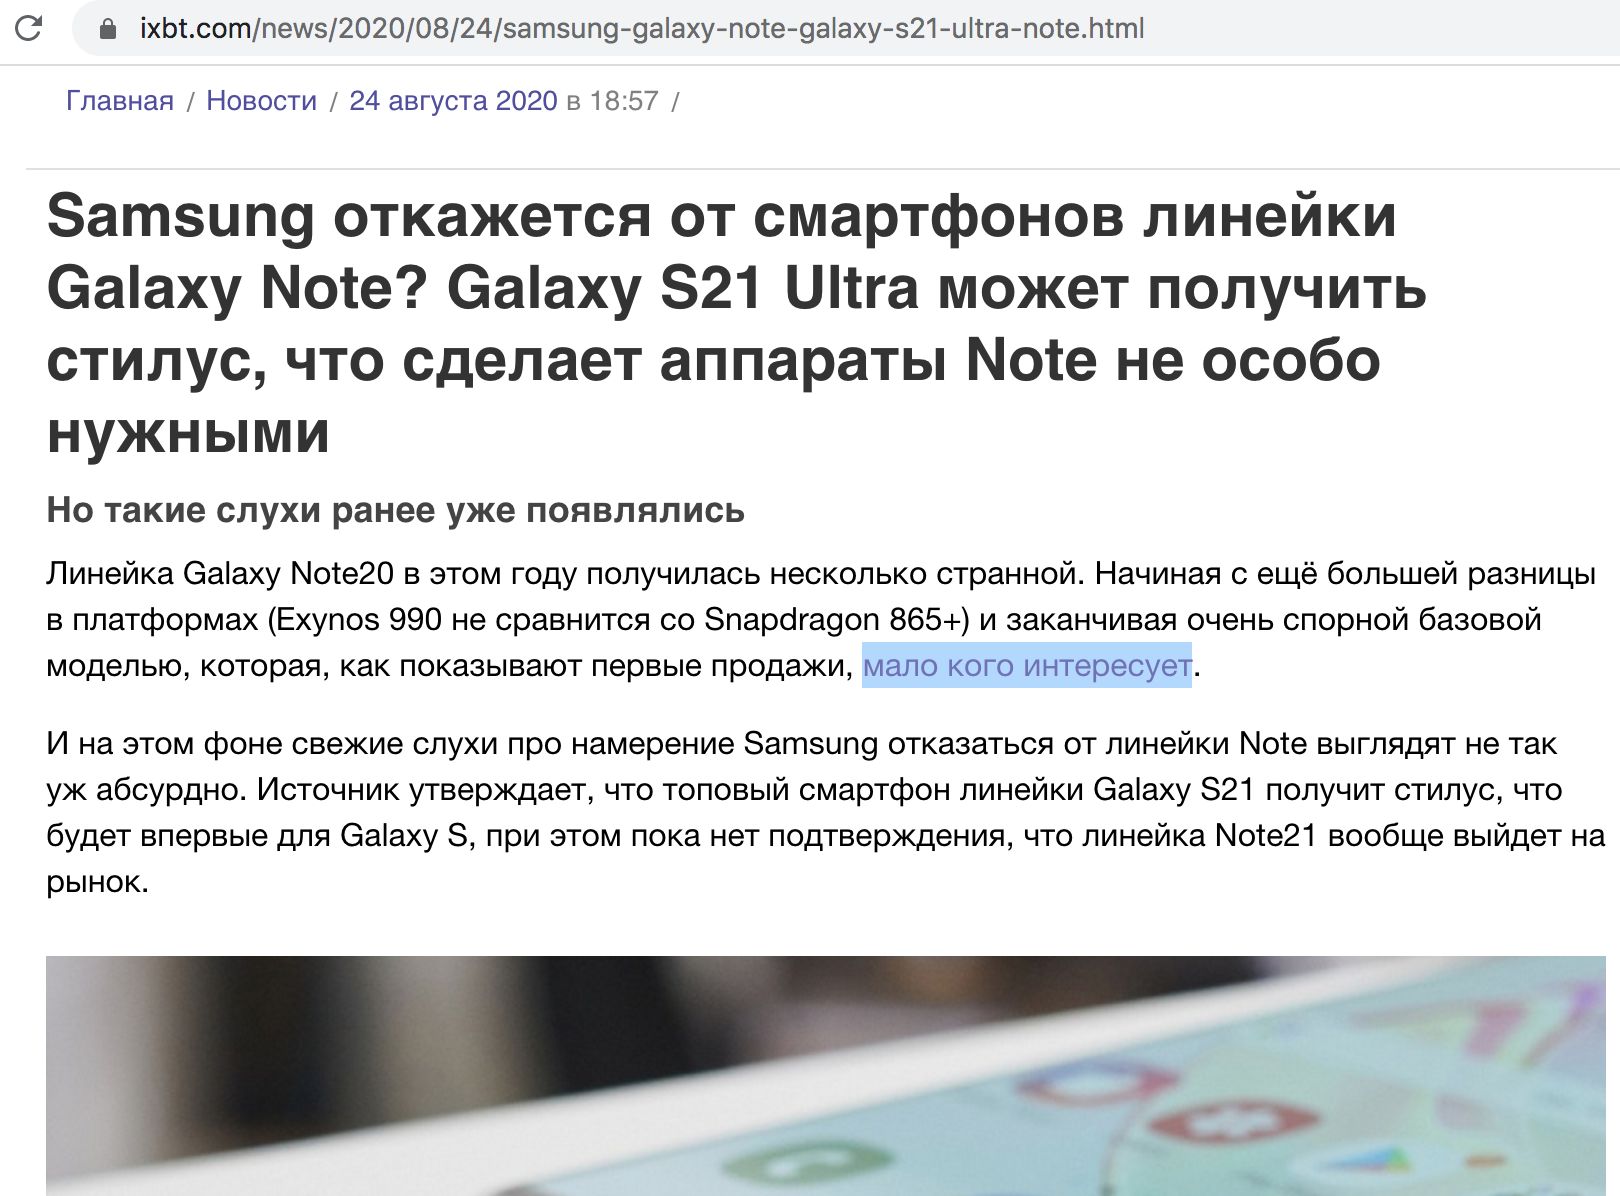  Galaxy Note  Samsung,  Note  !